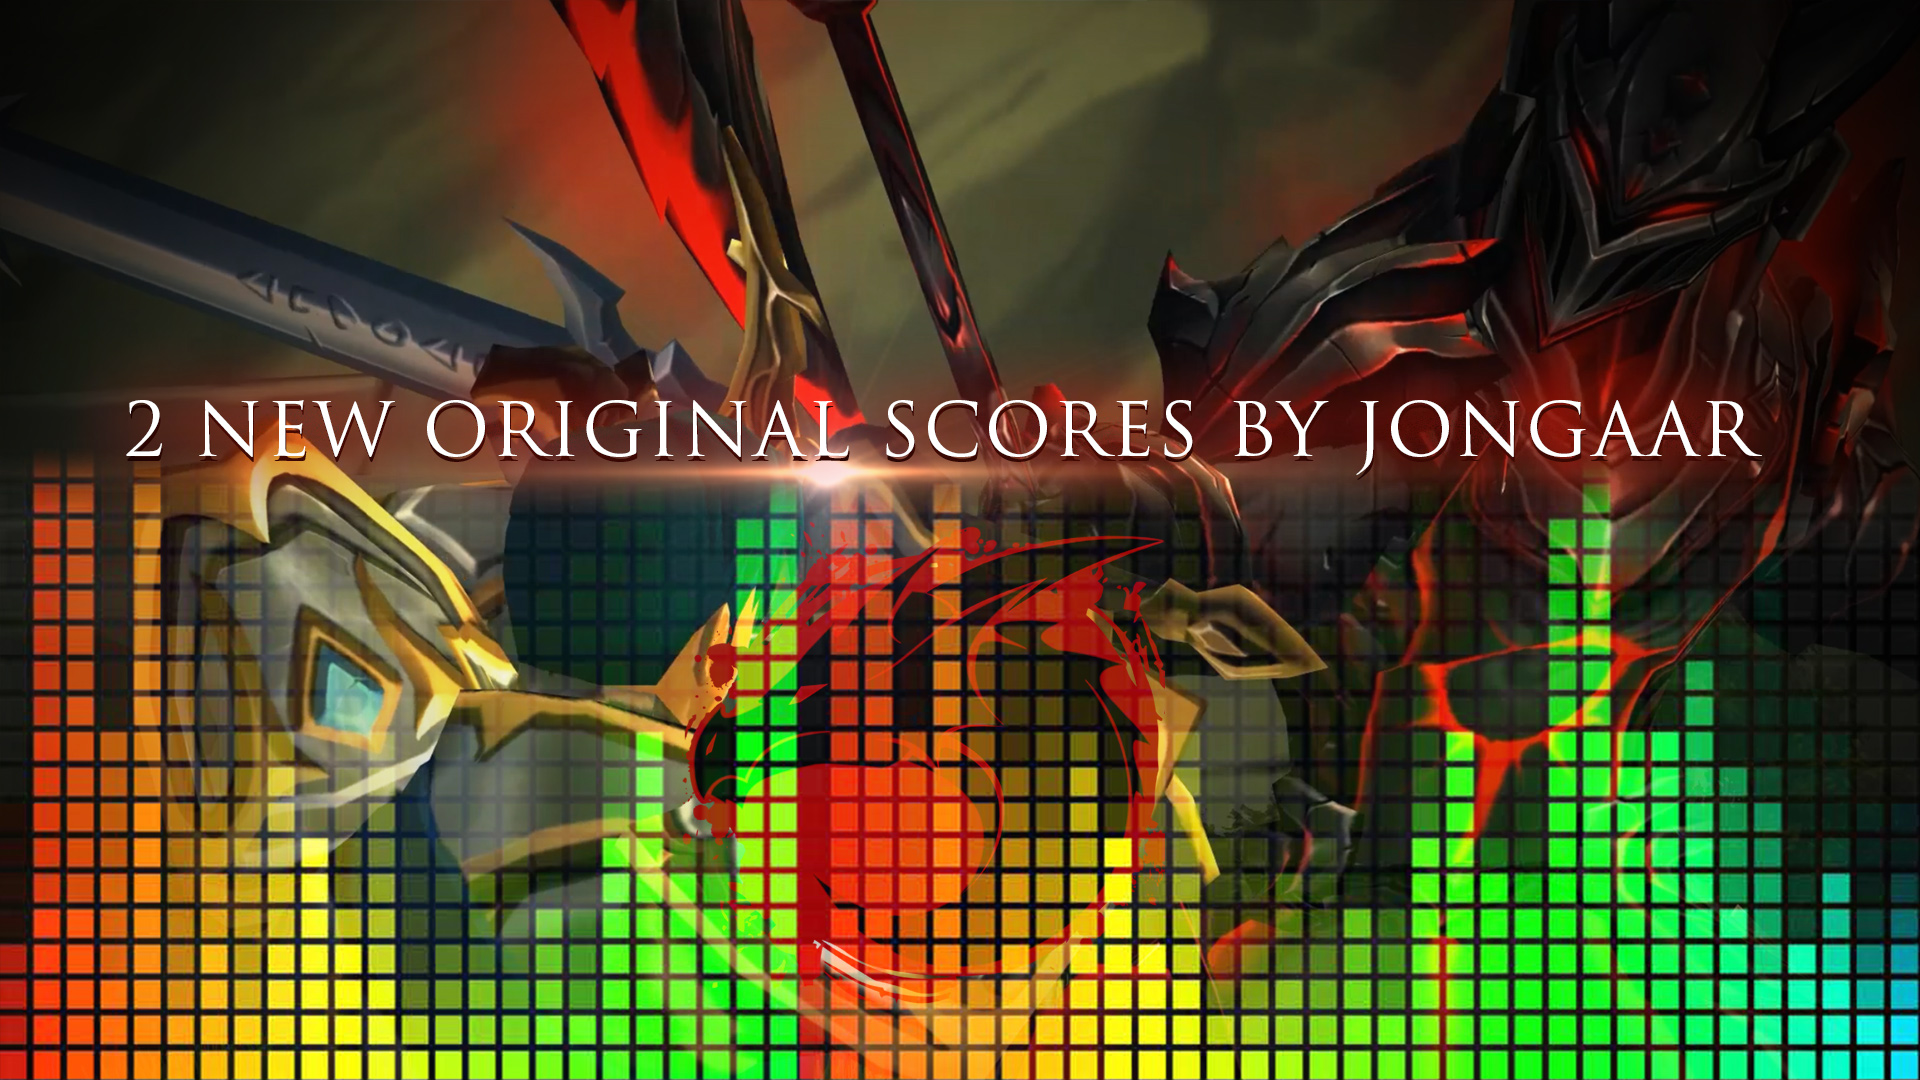 2 new music scores by Jongaar